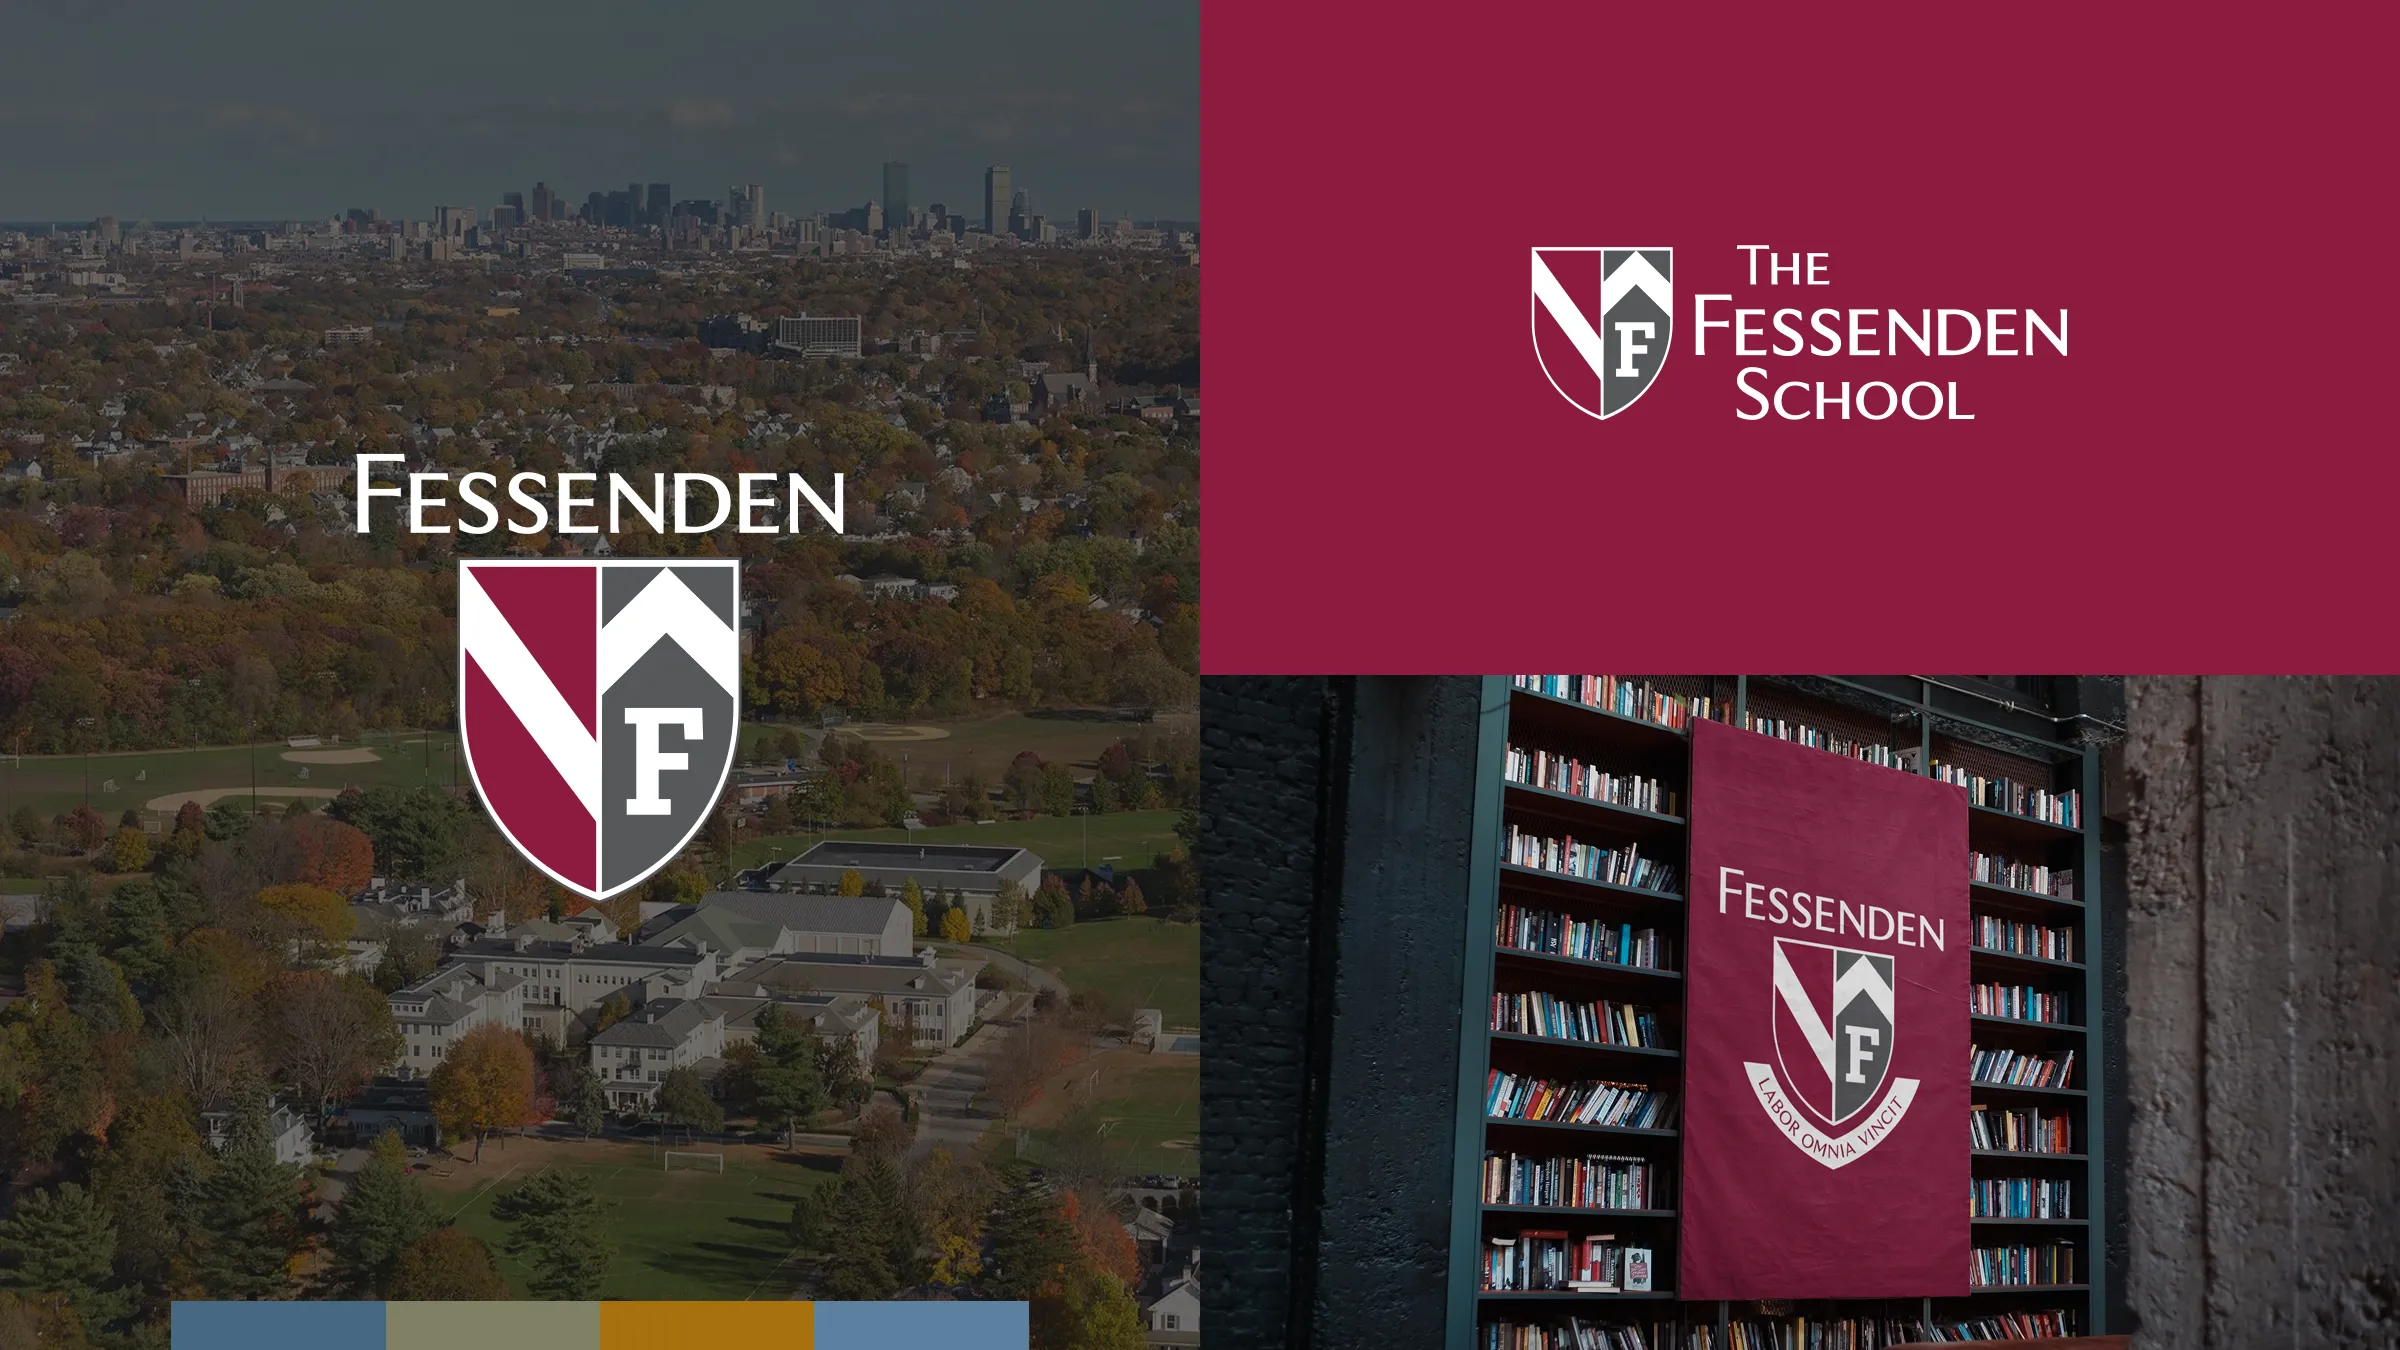 Branding & identity for The Fessenden School